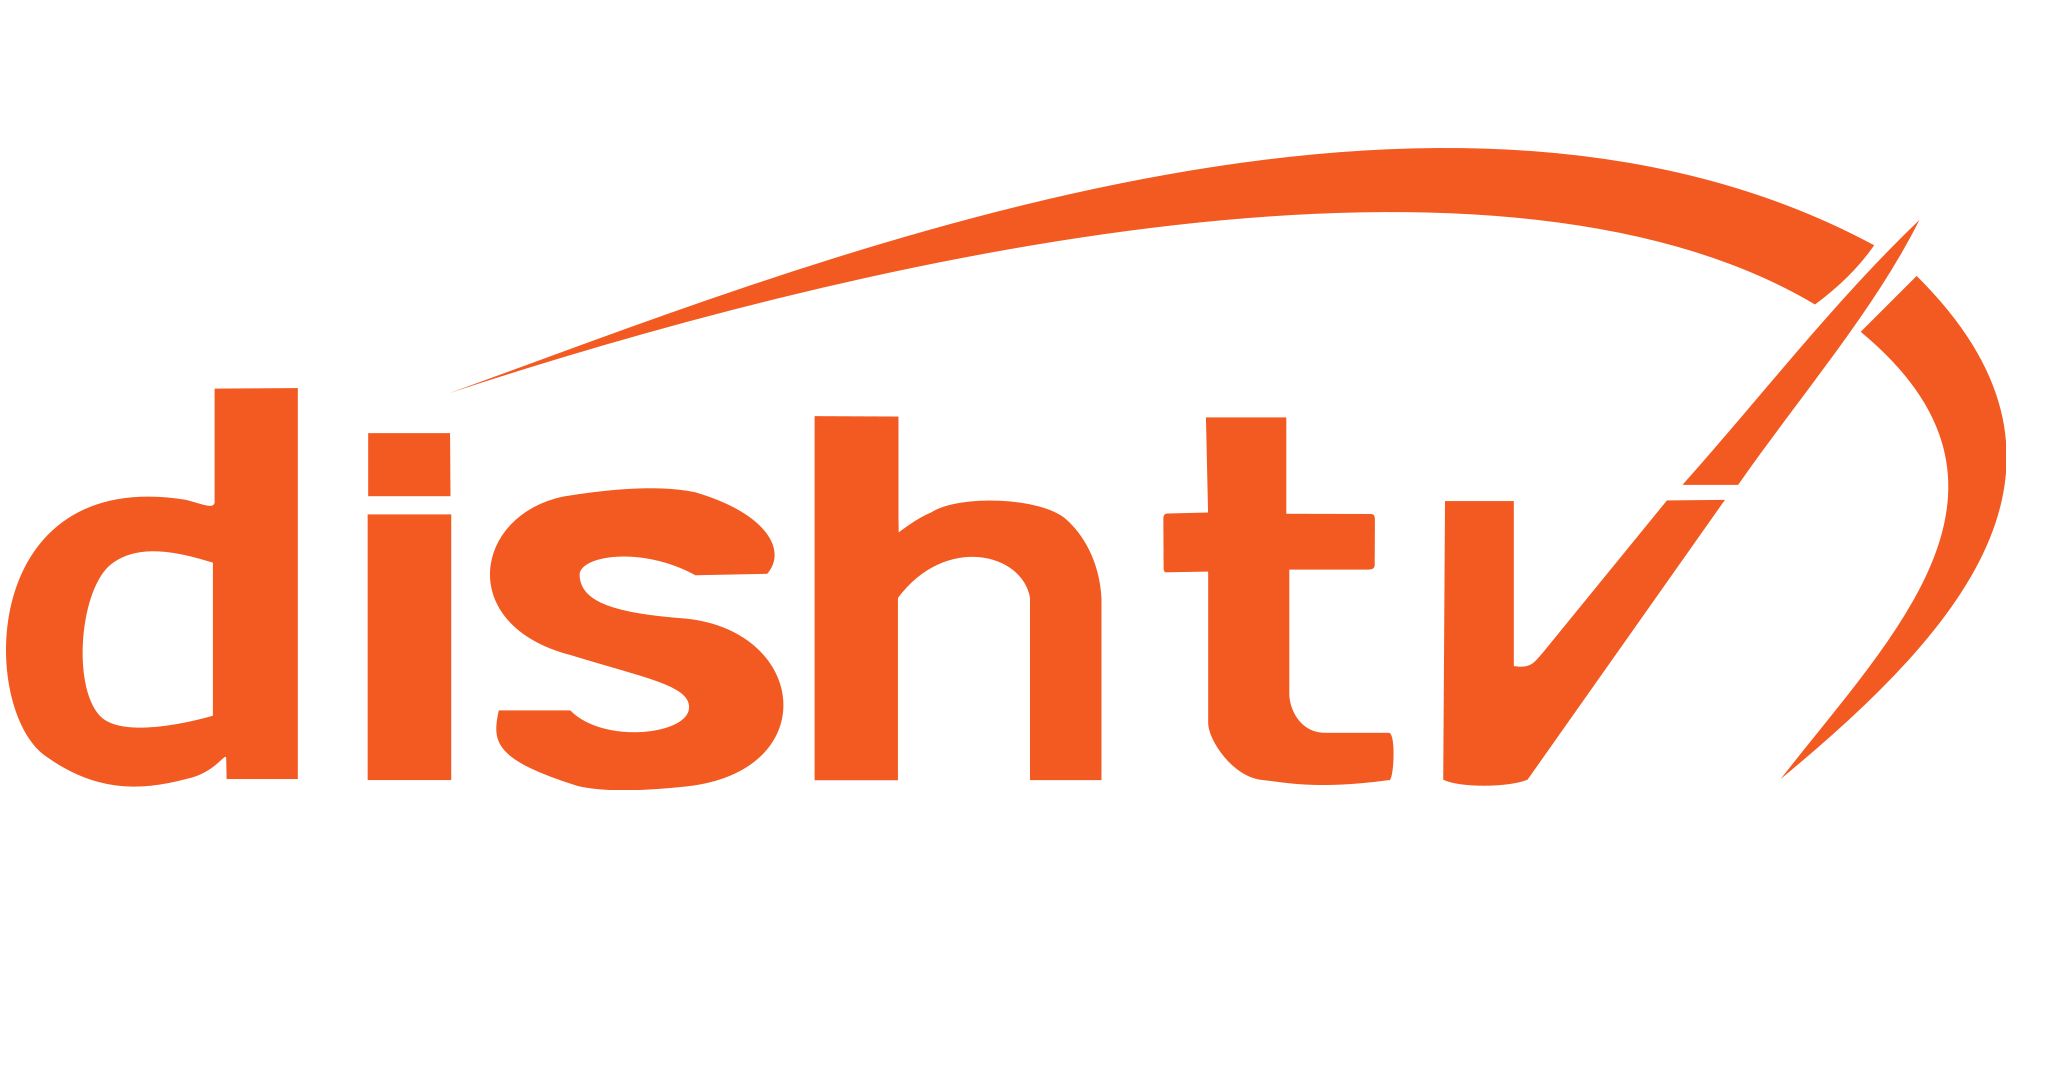 Dish tv. Pekah логотип. TV. Azon TV logo. Dishes logo.